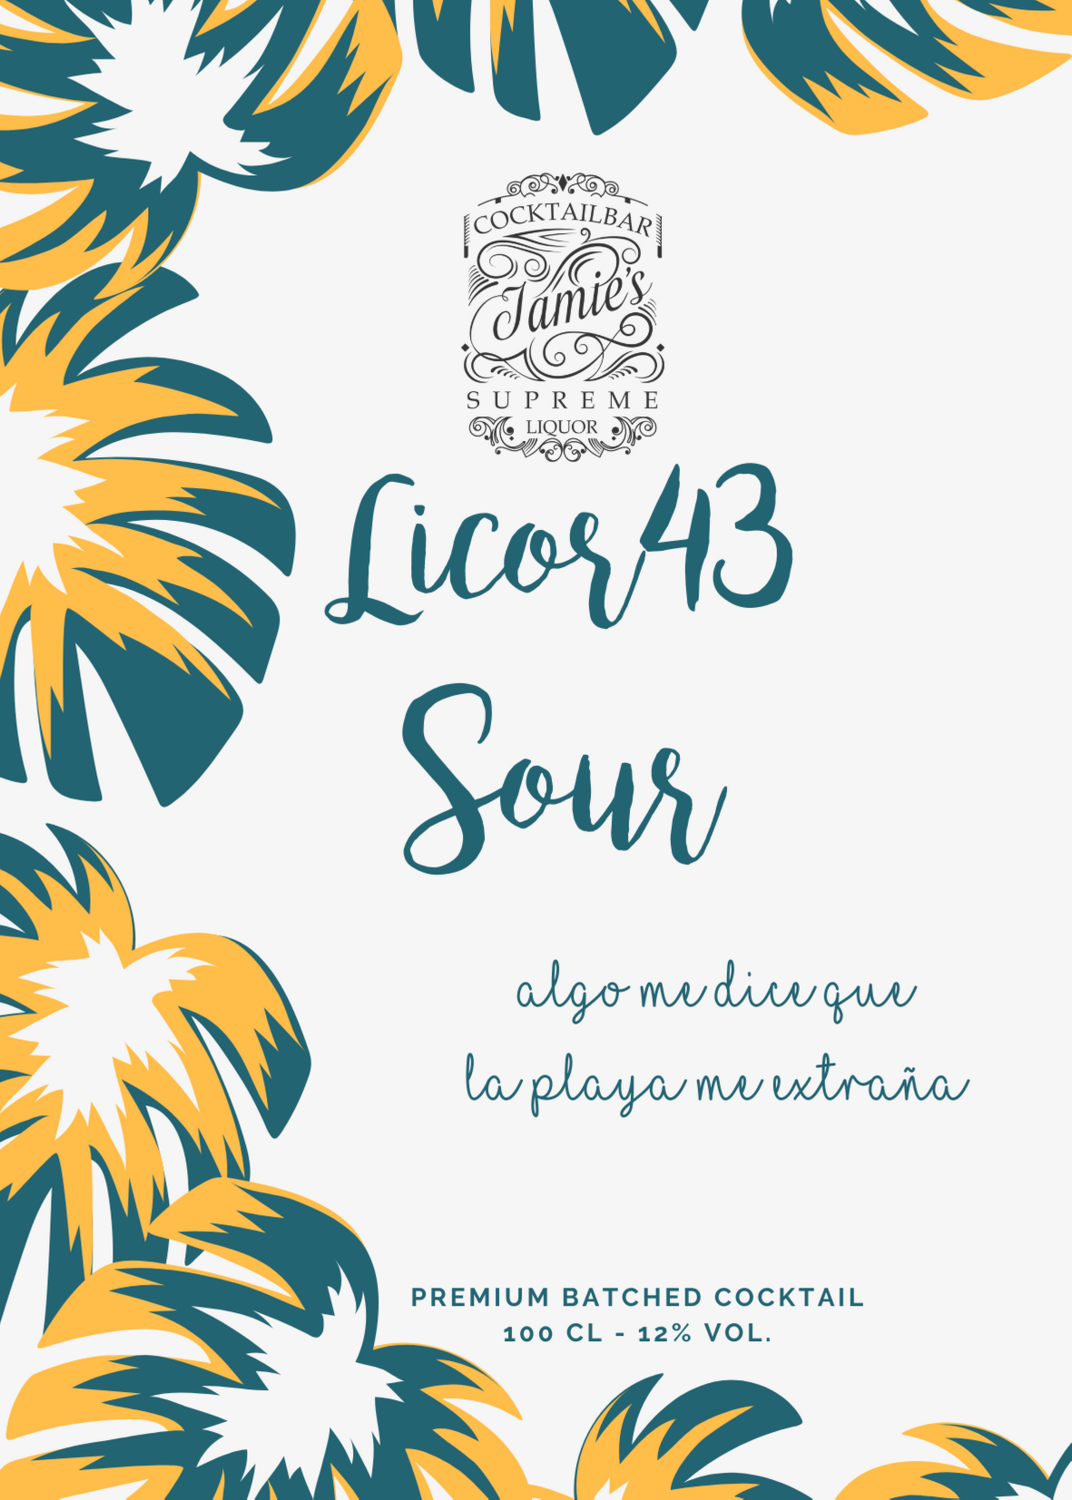 Licor43 Sour